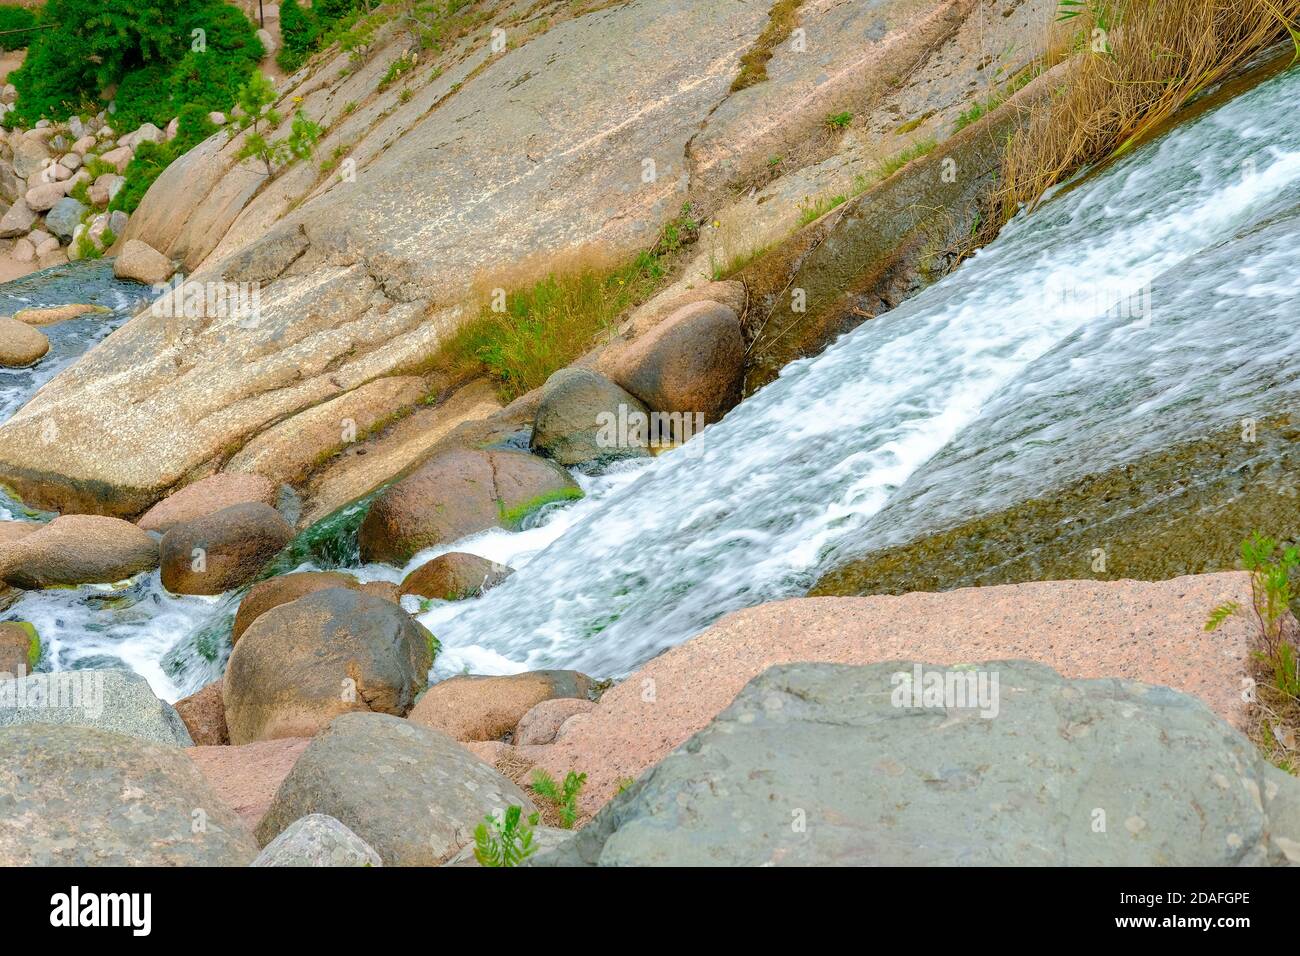 Stream in northern cliffs, Sapokka landscape park, Kotka, Finland. Stock Photo